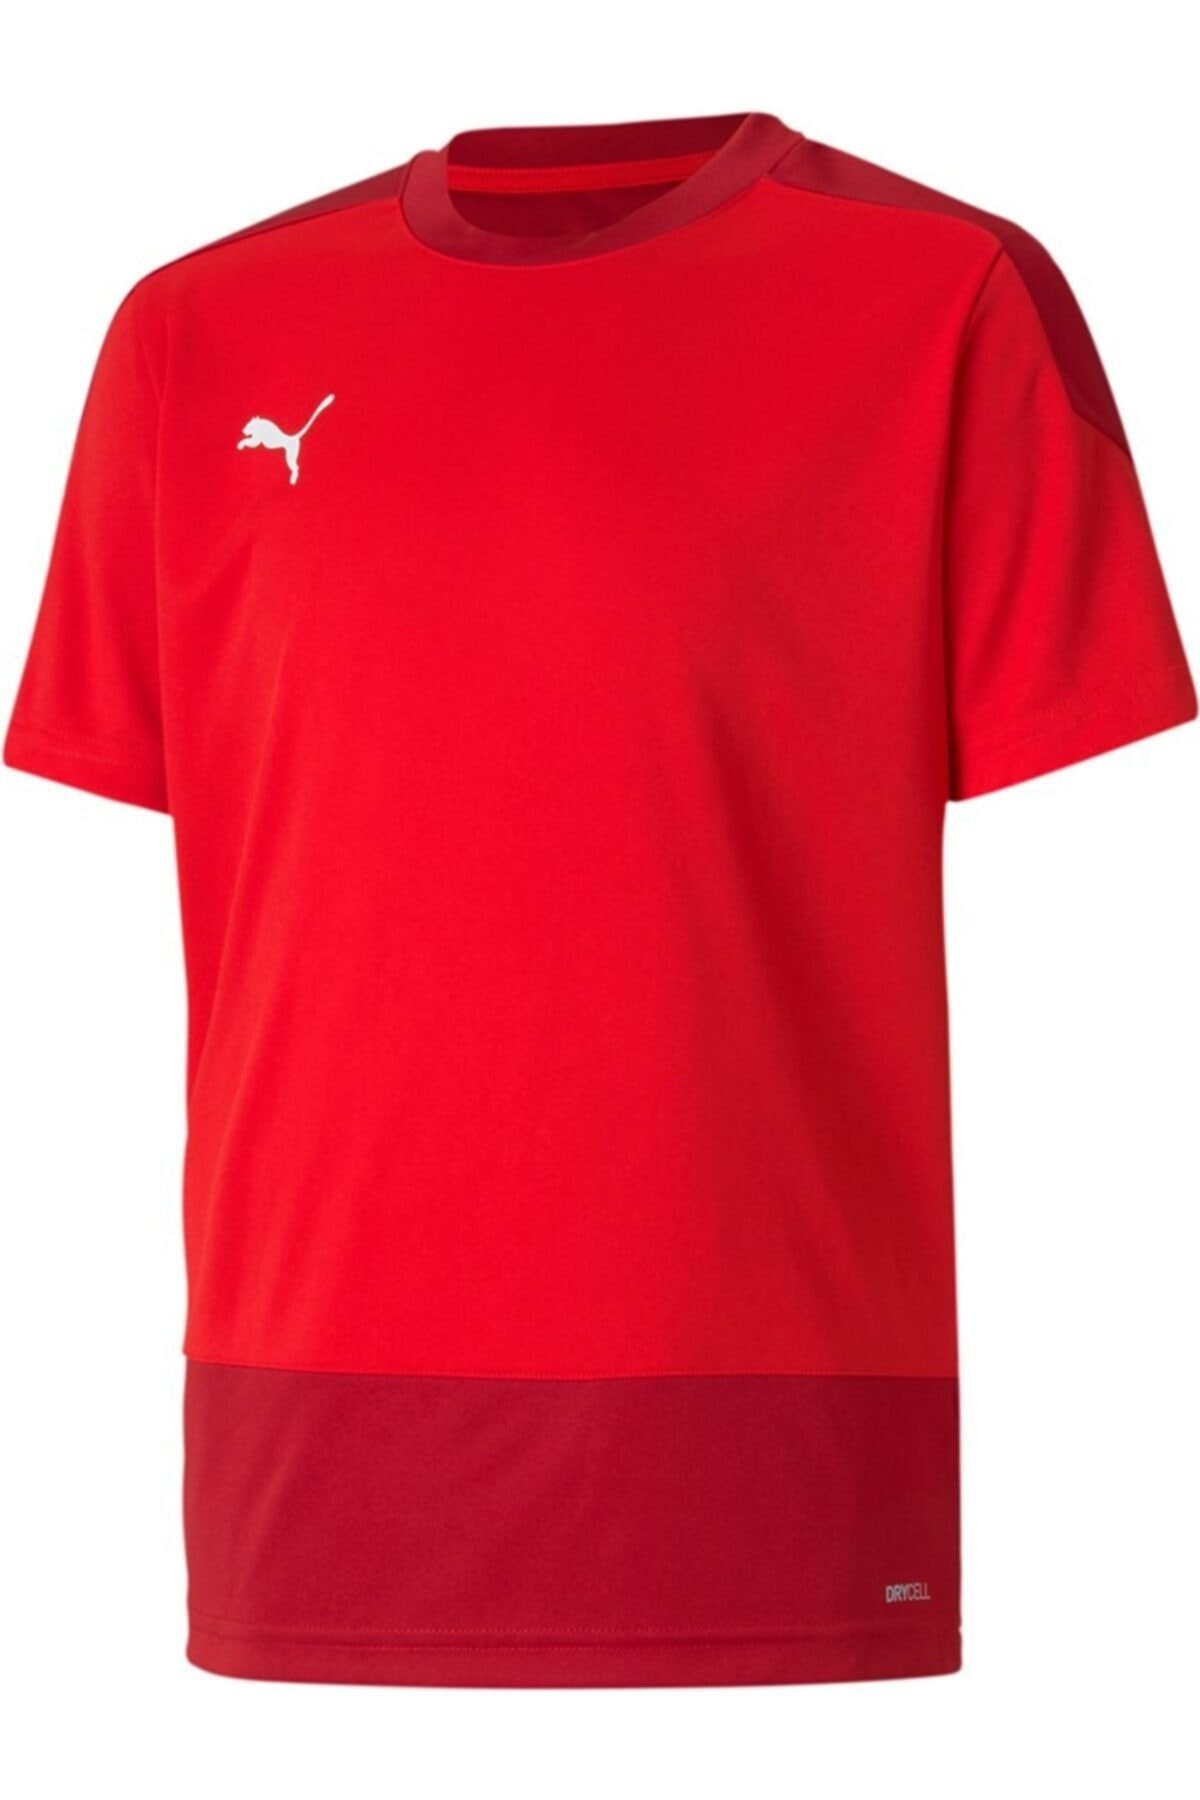 Puma Men Team Goal 23 T-Shirts Training Red Soccer Tee Top Jersey 65648201